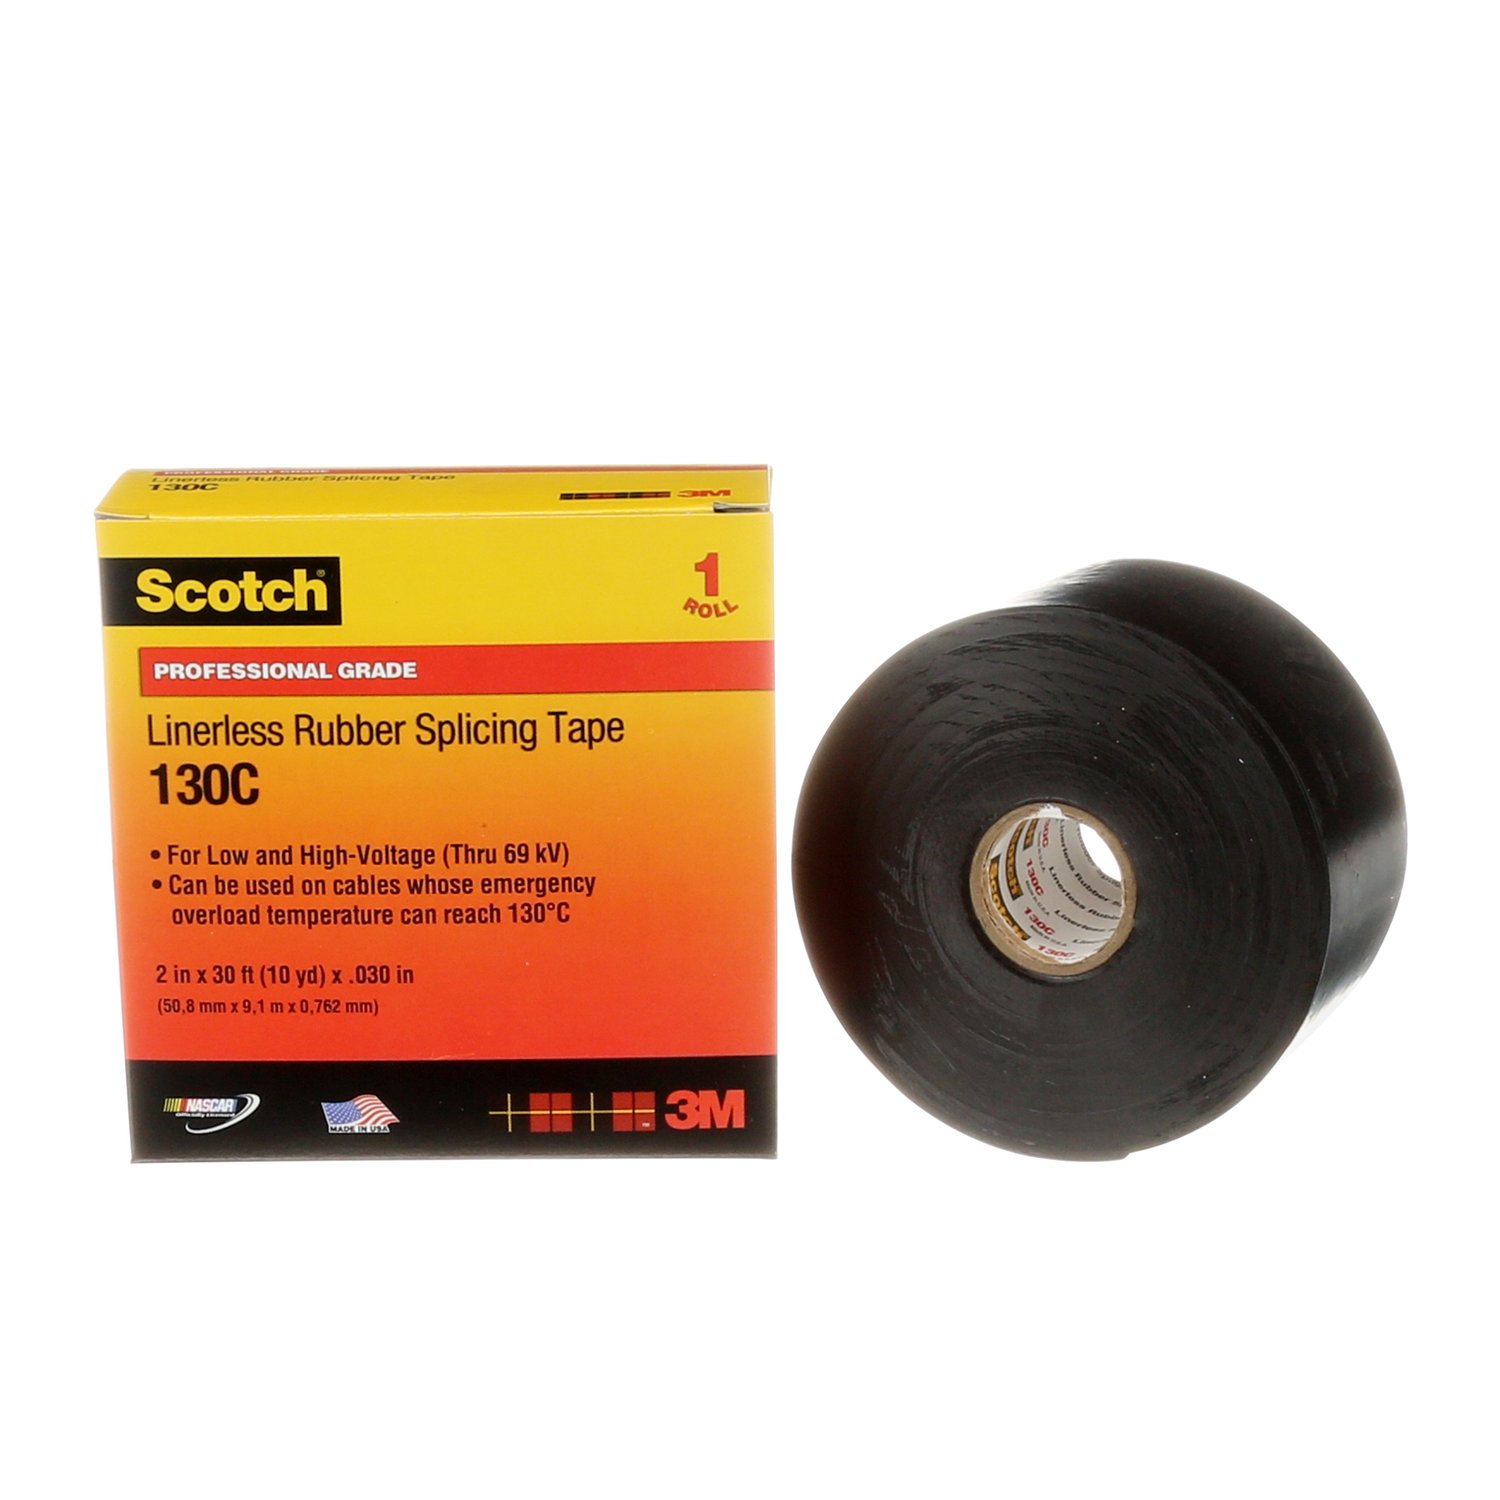 7000006091 - Scotch Linerless Rubber Splicing Tape 130C, 2 in x 30 ft, Black, 12
rolls/Case